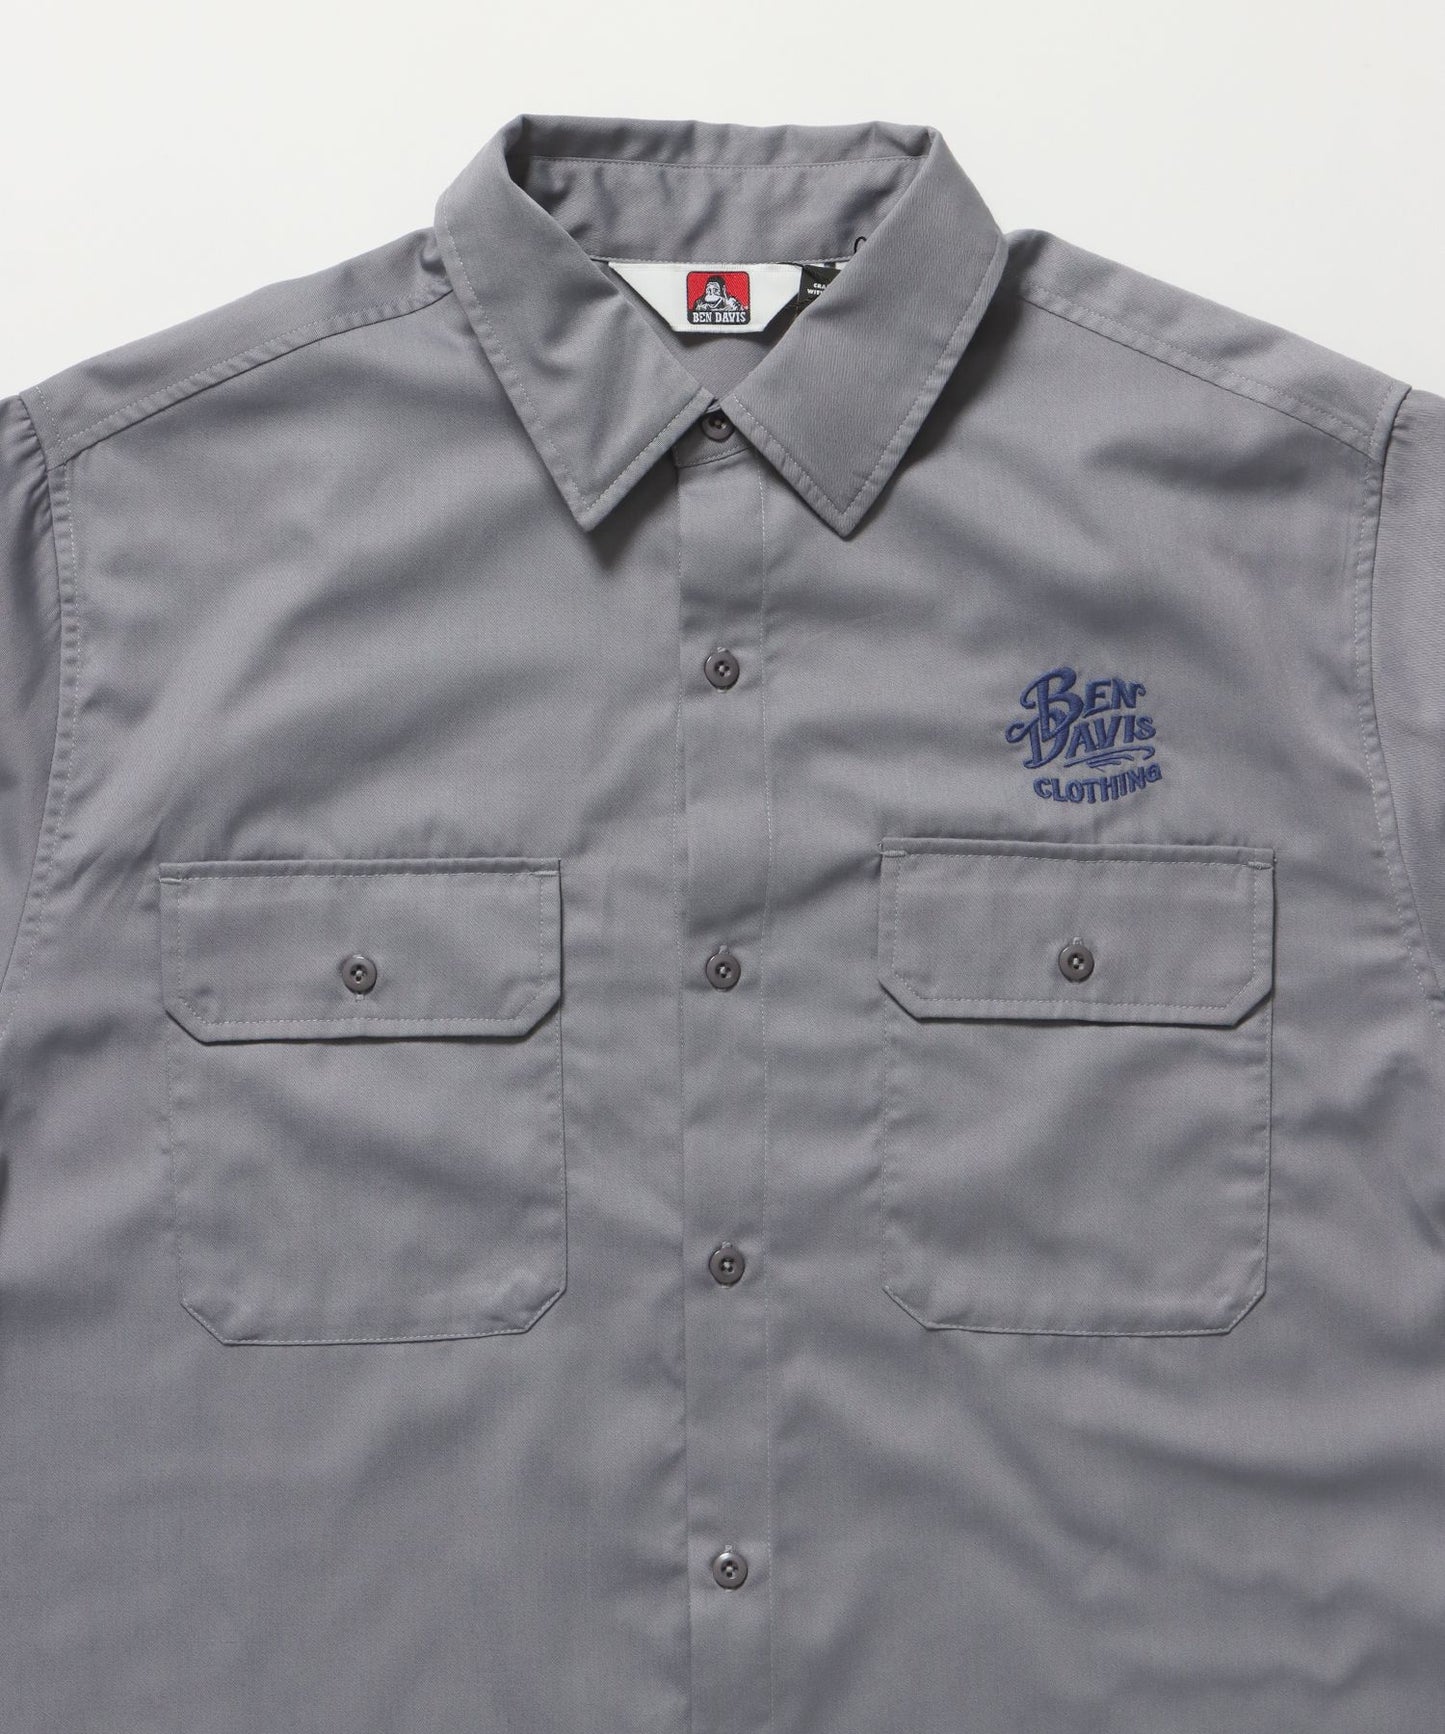 NEEDLEWORK S/S WORK SHIRT / 半袖 ワークシャツ レギュラーカラー 刺繍 ブランドロゴ ライトグレー